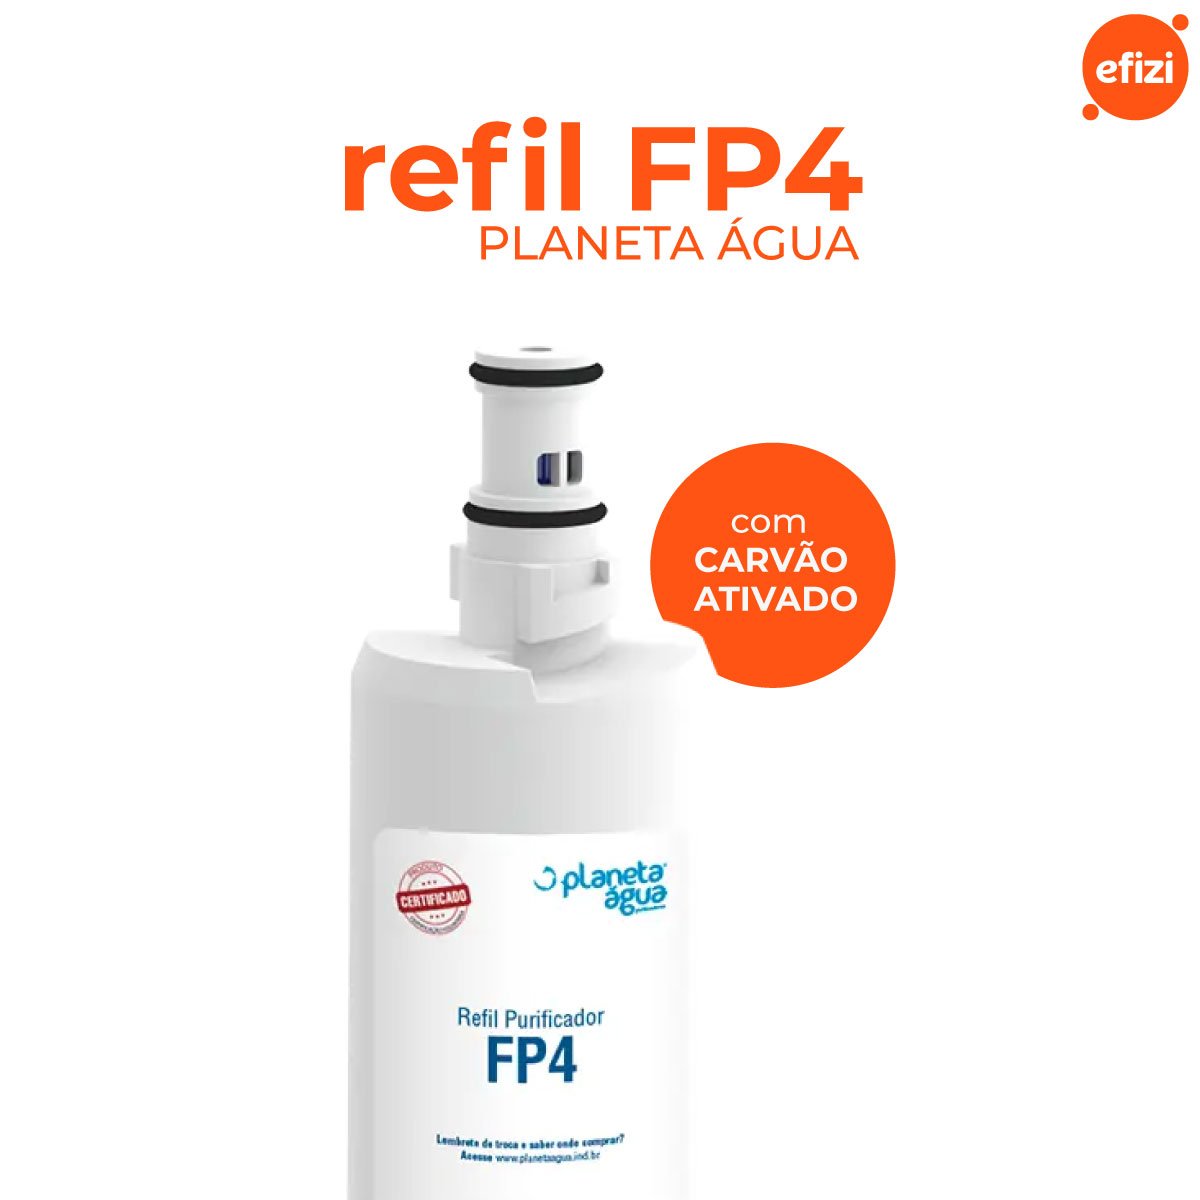 Refil Filtro Fp4 para Purificador Consul Planeta Água - 2